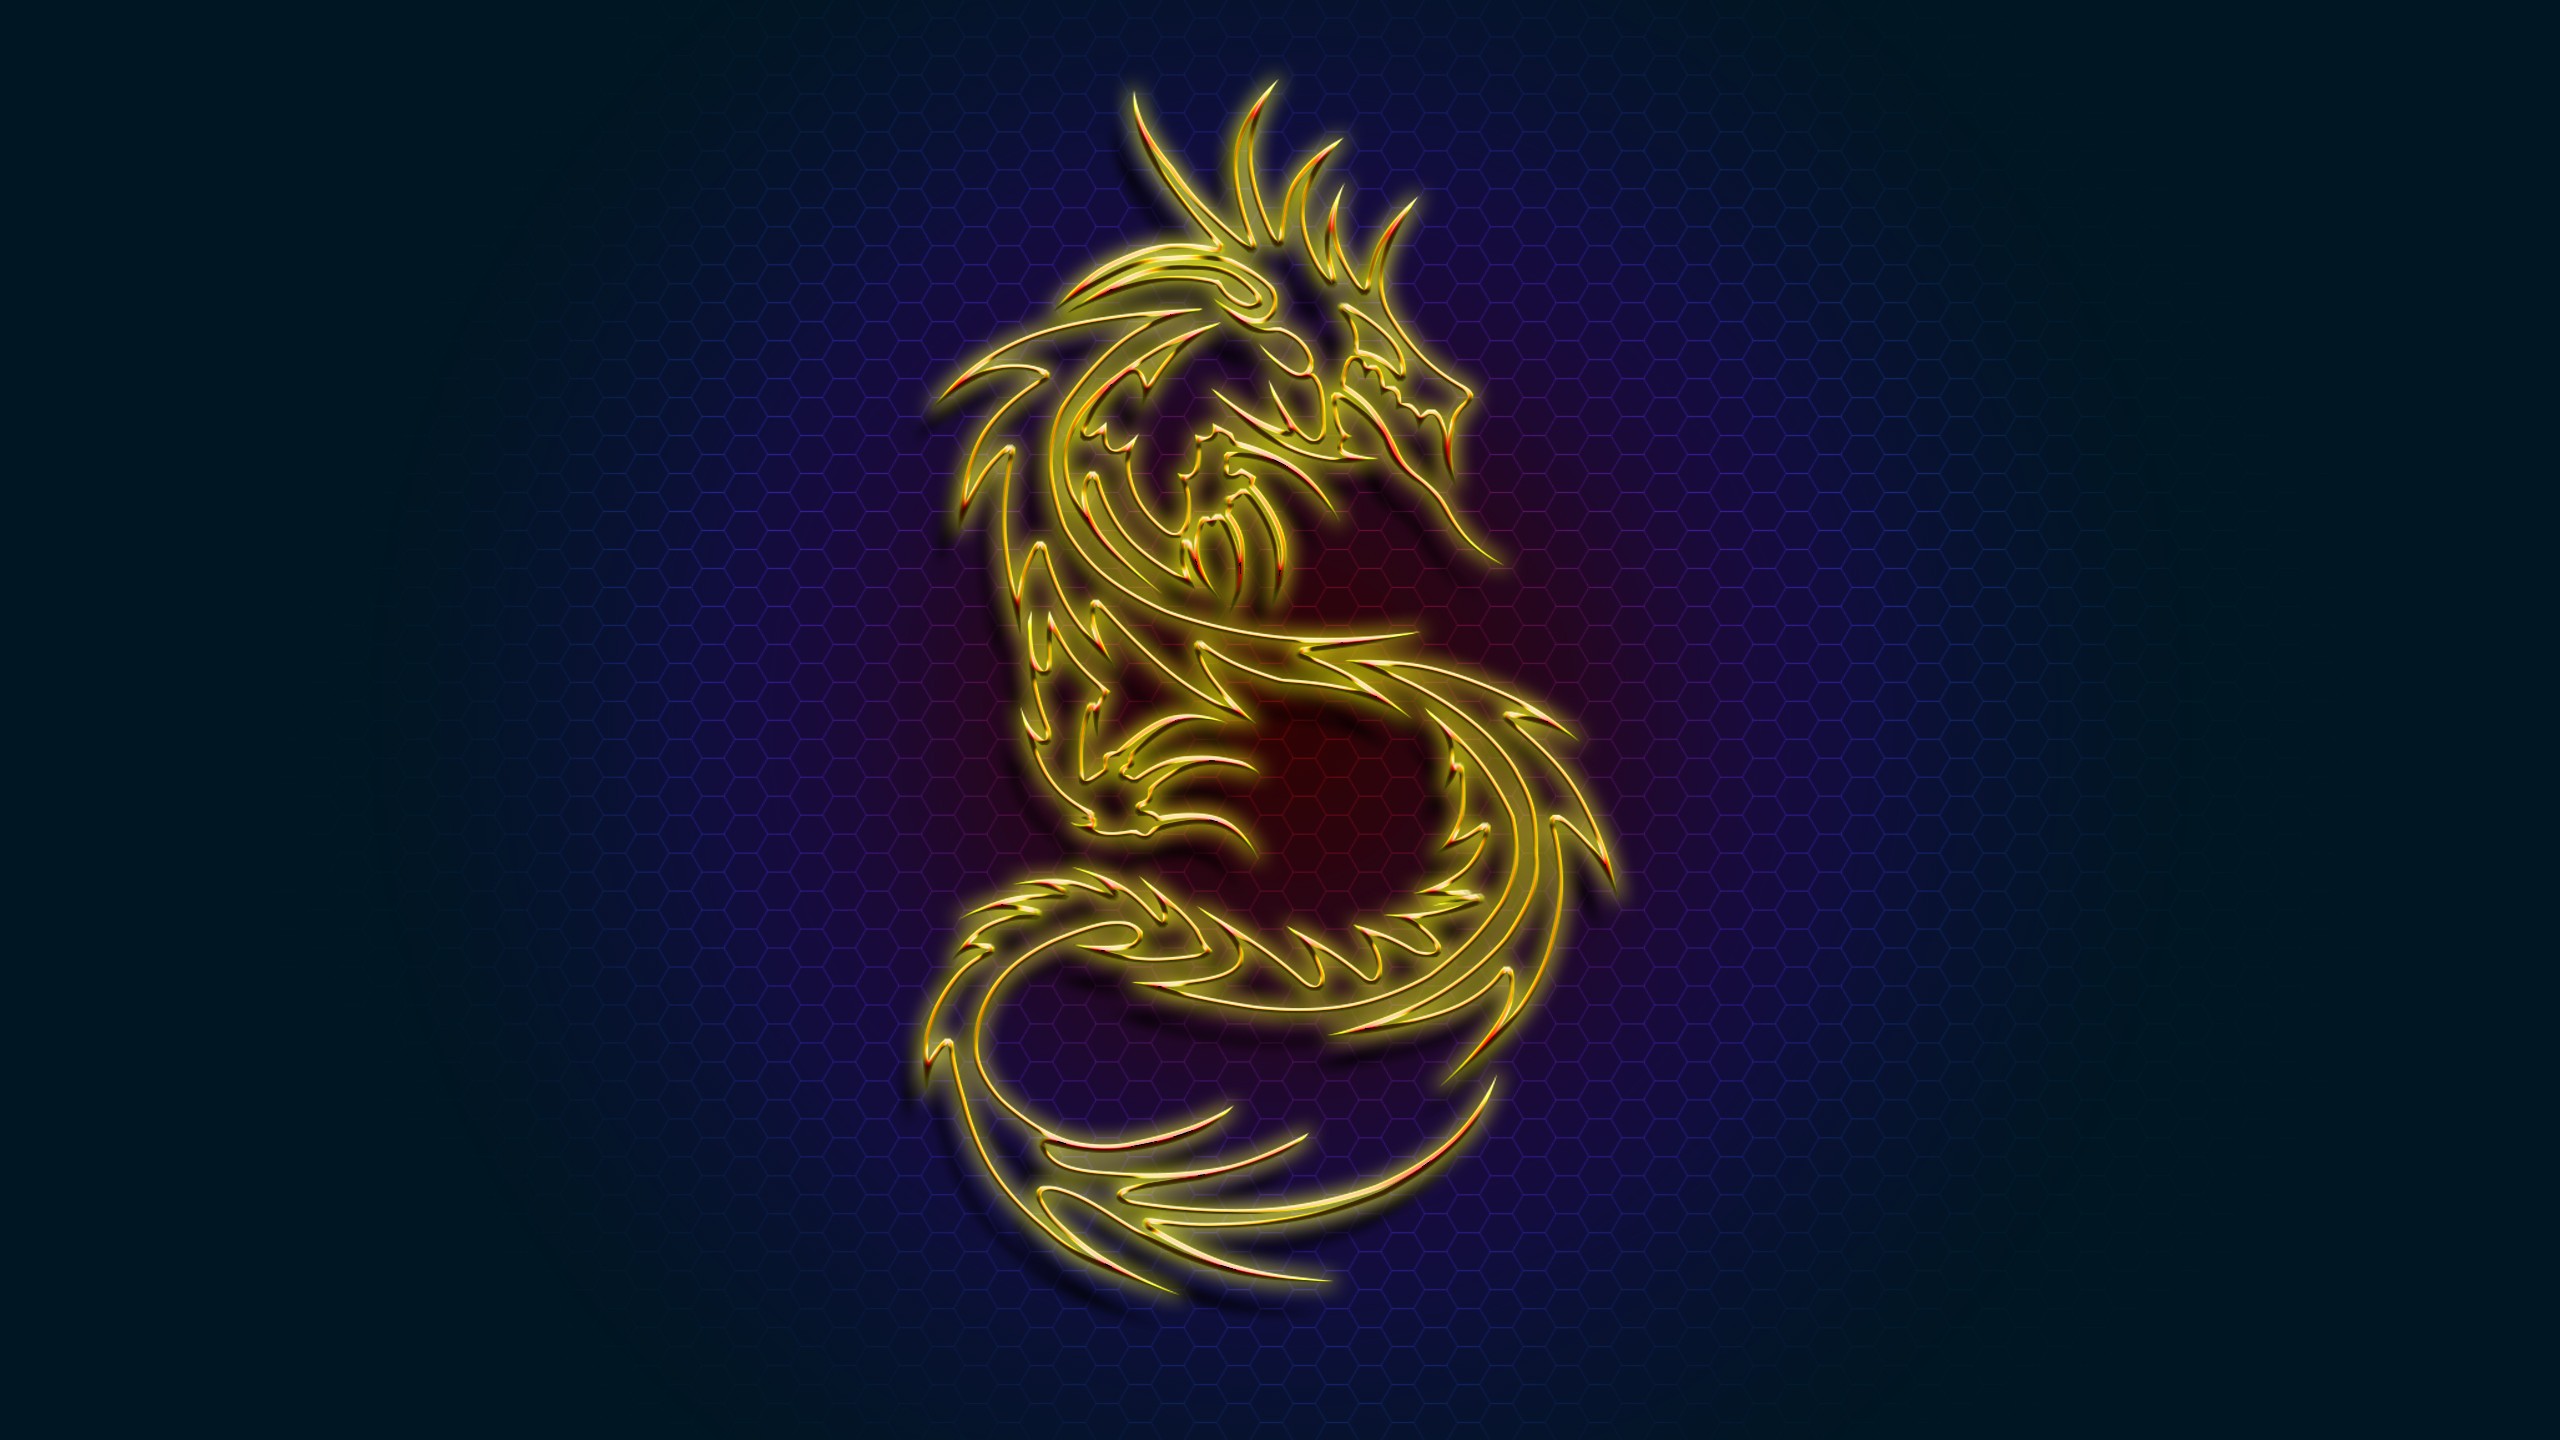 General 2560x1440 dragon gold blue background artwork grid digital art Chinese dragon